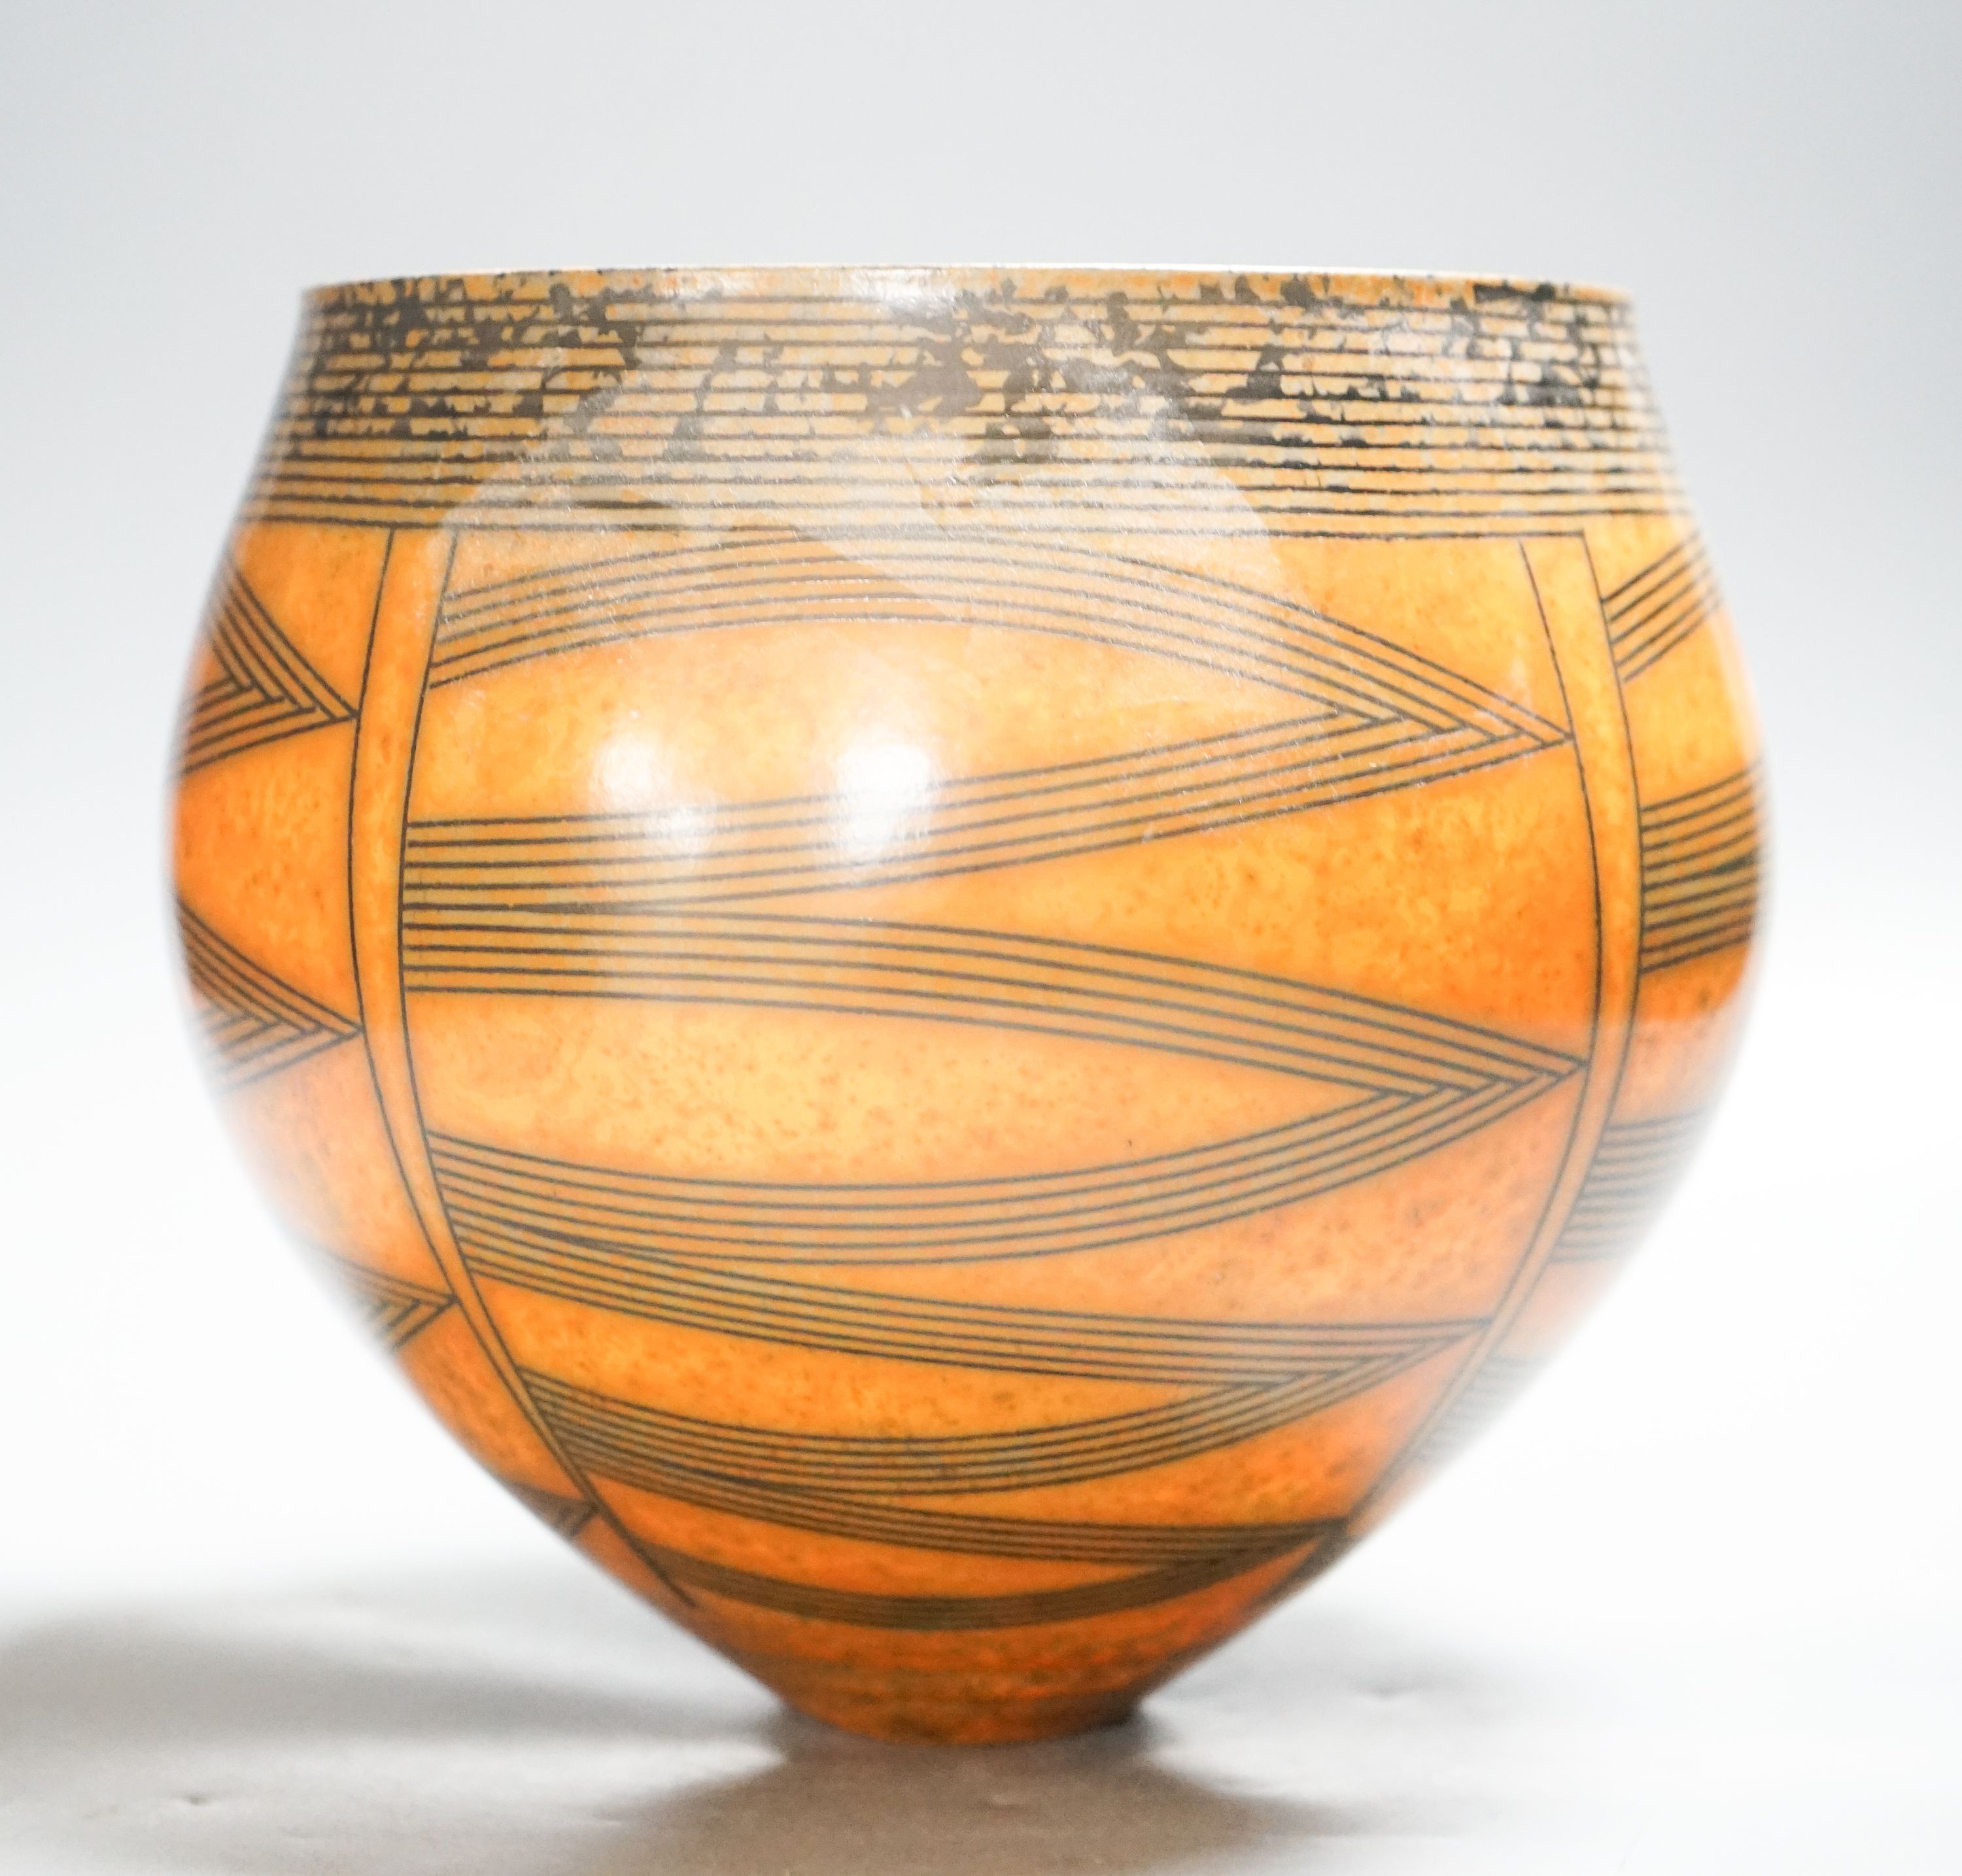 Duncan Ross (b.1943), a burnished terra-sigillata globular vase 21cm wide, 19cm high